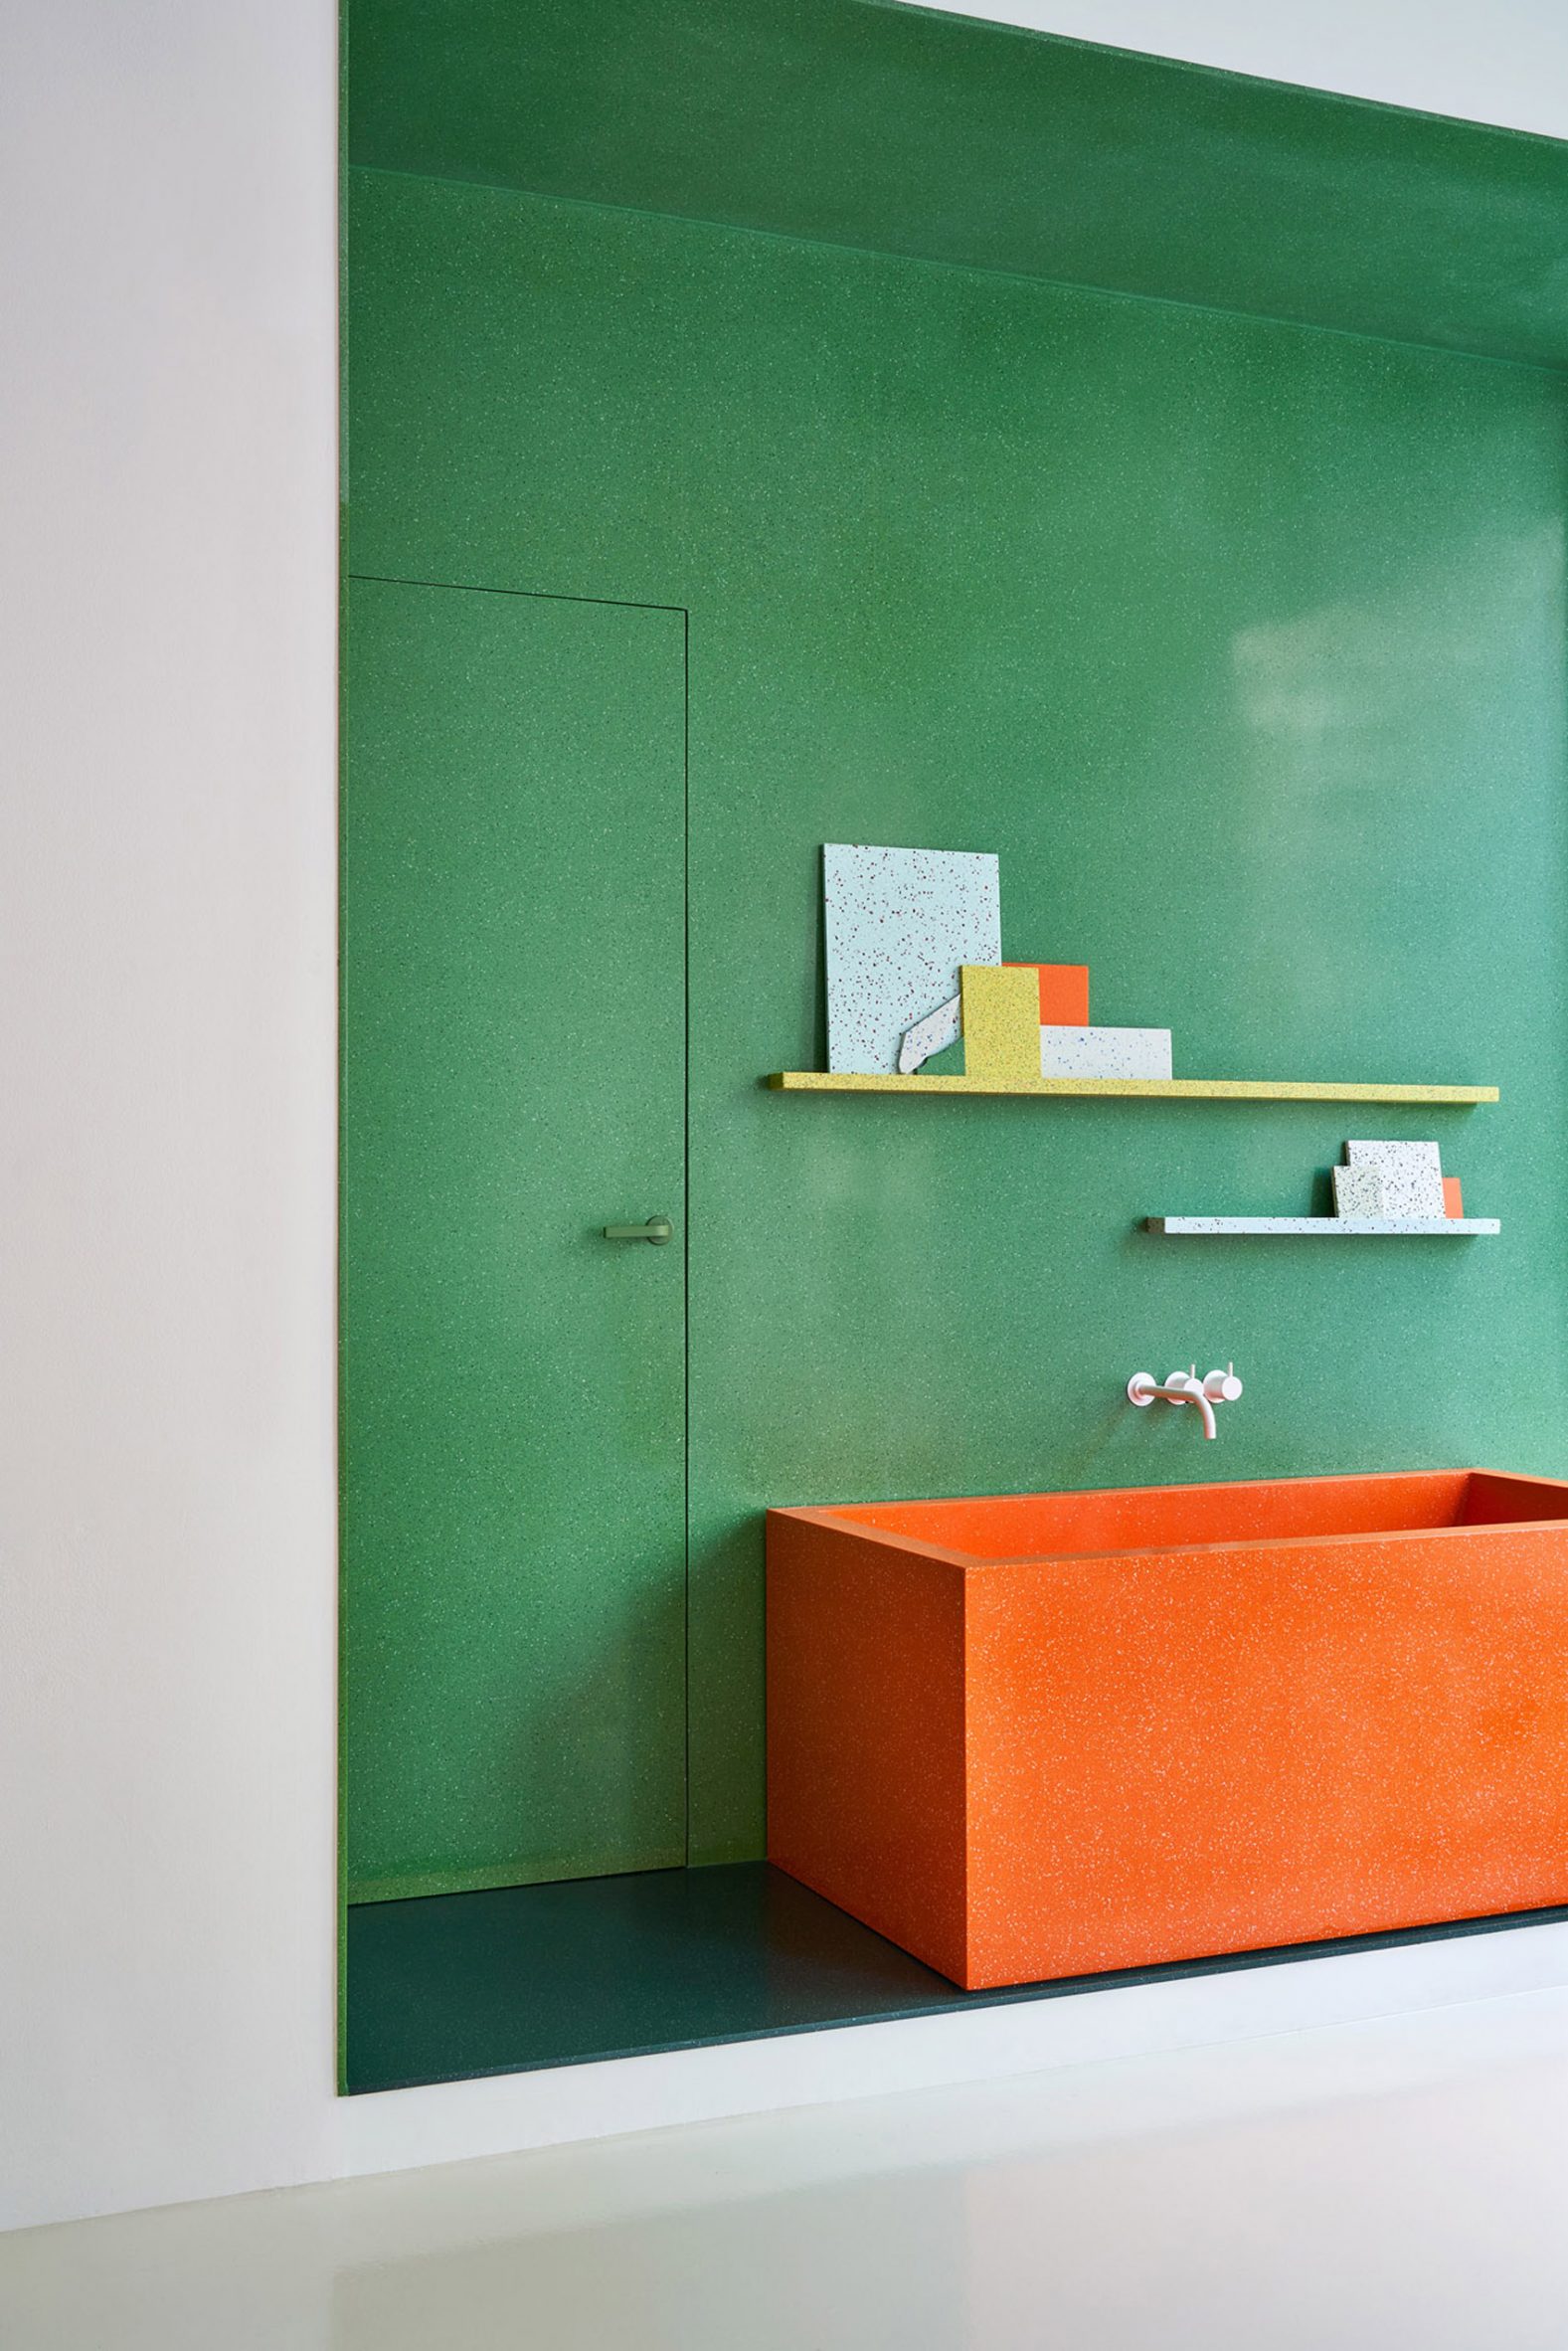 Orange wash trough against a green wall in the Durat Helsinki showroom